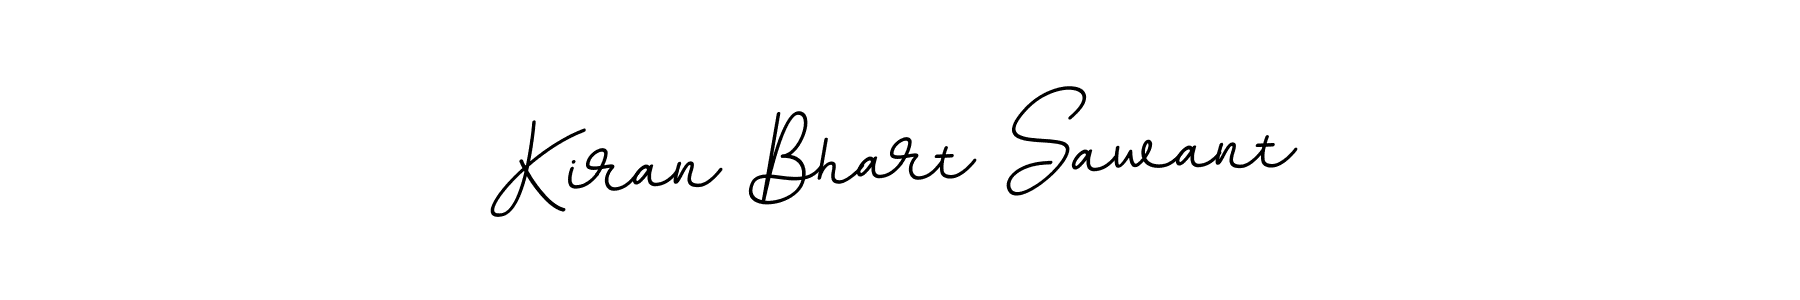 How to Draw Kiran Bhart Sawant signature style? BallpointsItalic-DORy9 is a latest design signature styles for name Kiran Bhart Sawant. Kiran Bhart Sawant signature style 11 images and pictures png